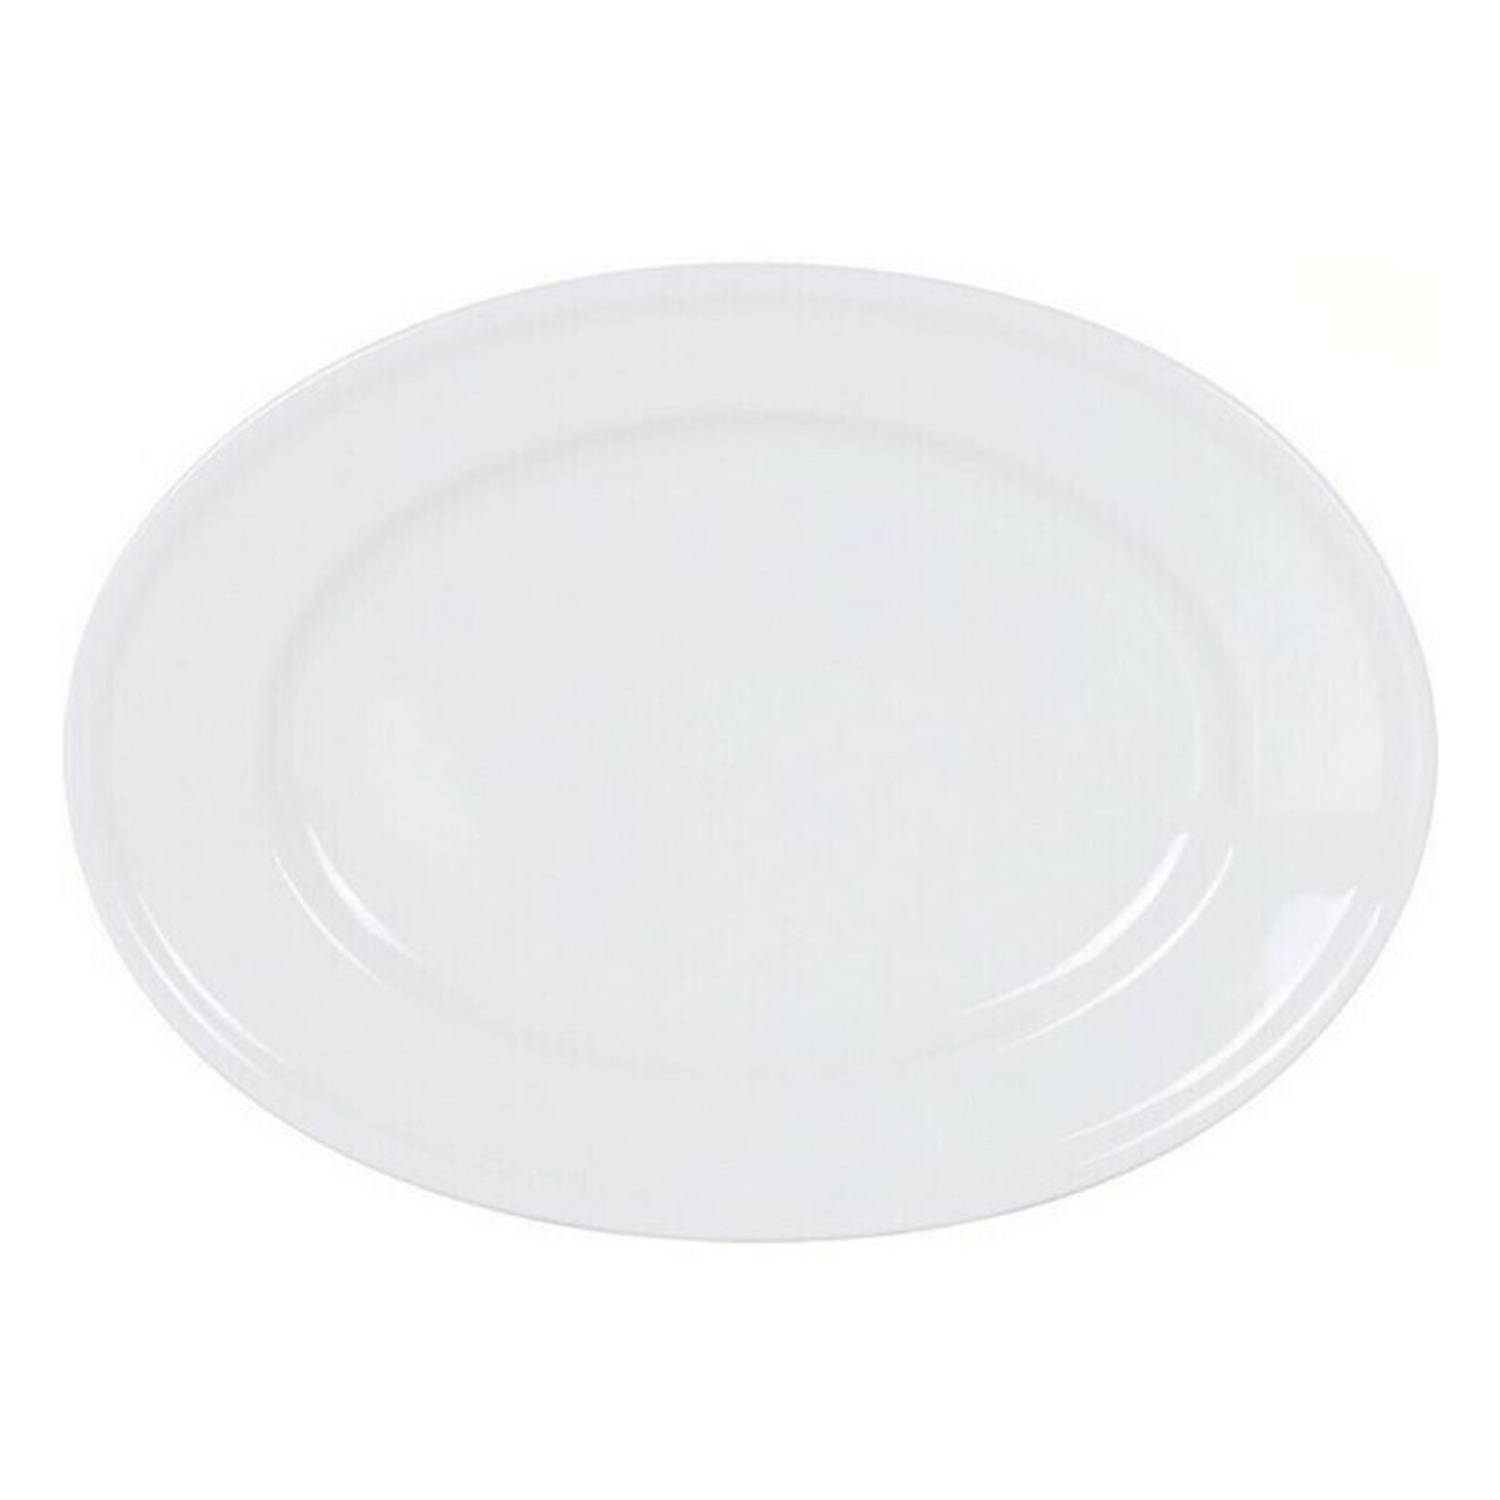 Serving Platter Olympia Oval Porcelain White (31 cm)